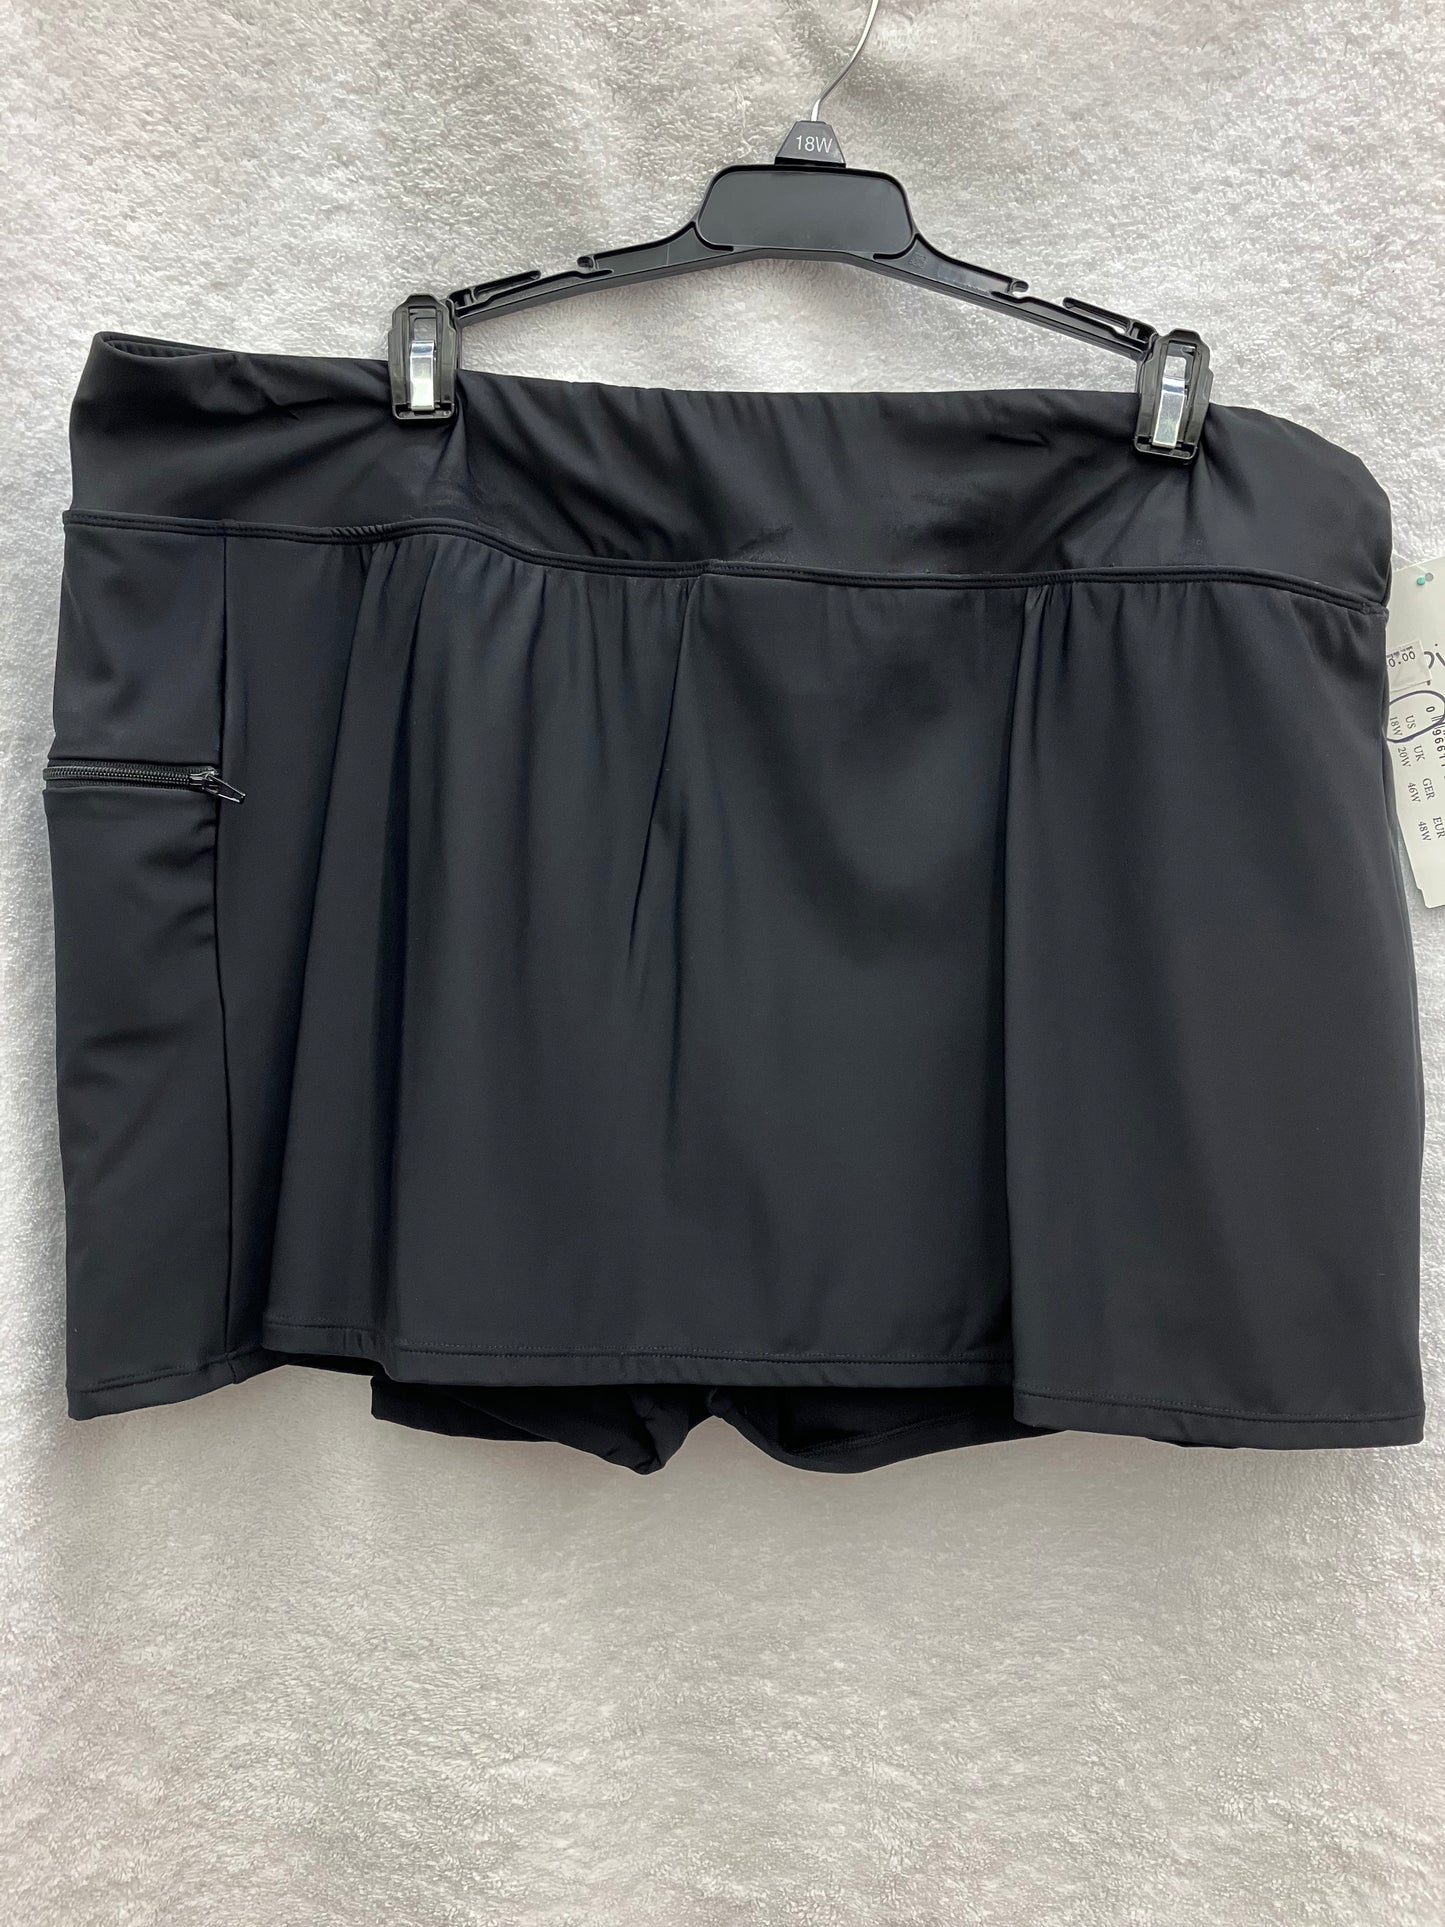 Penbrooke Black Skirt Size 18W